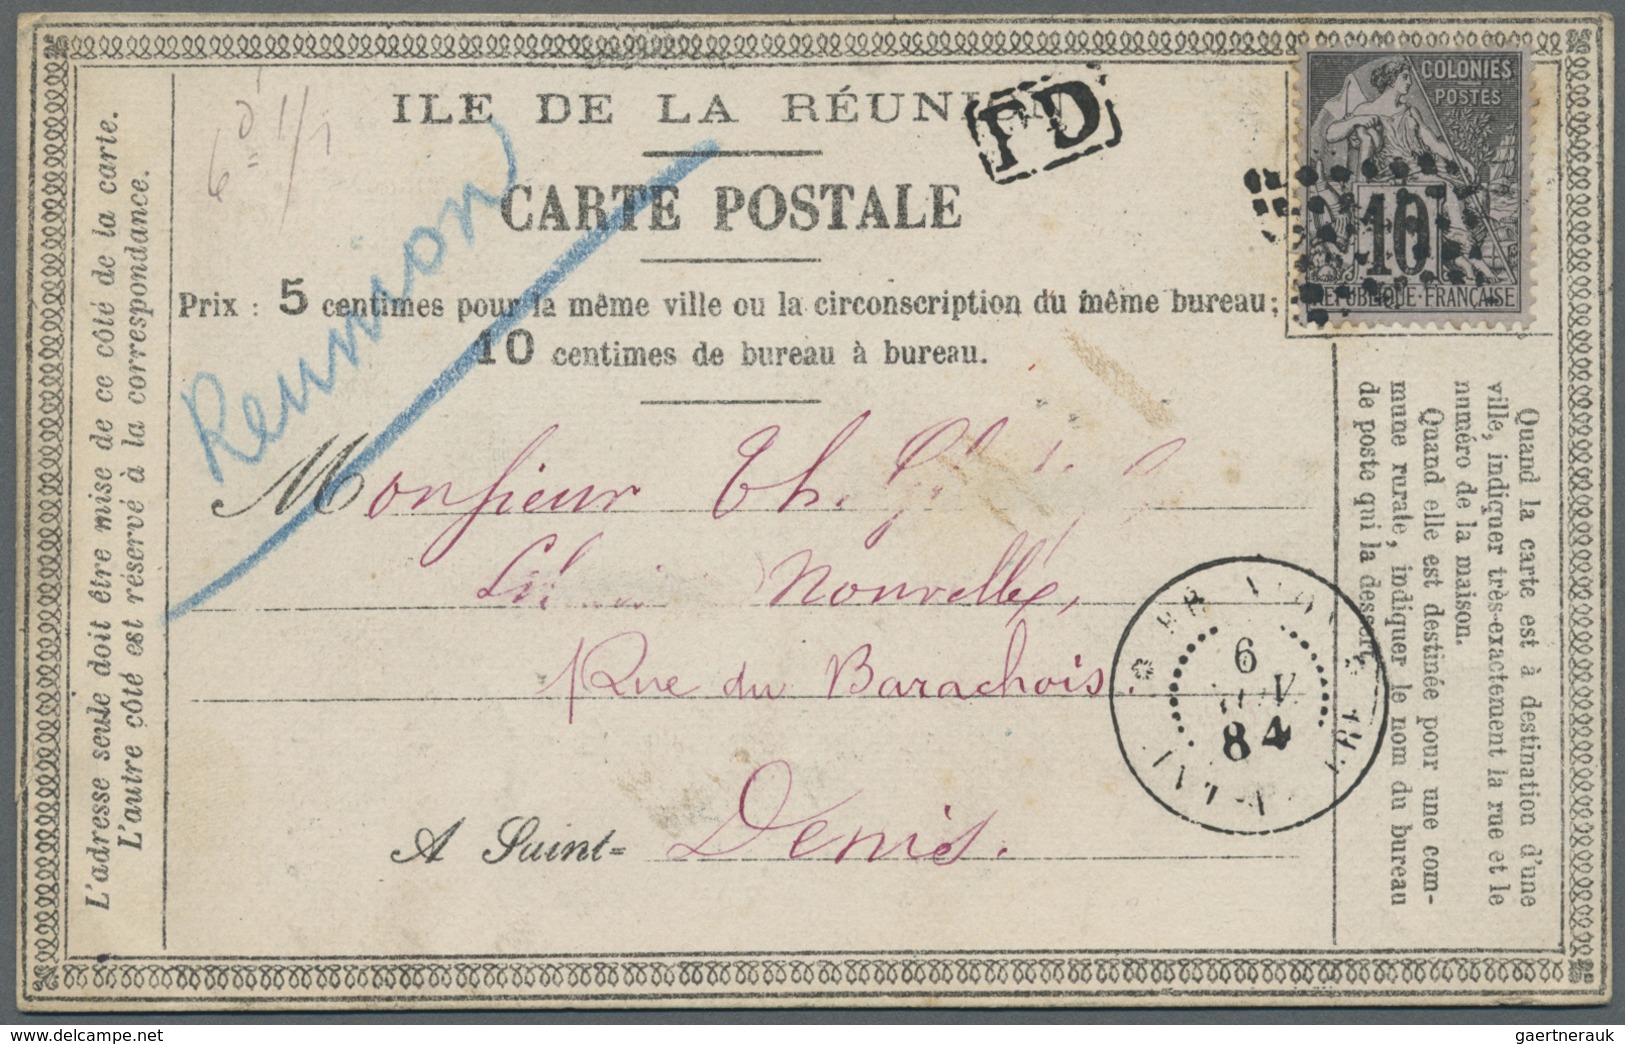 GA Reunion: 1884, Postcard Form W. Colonies 10 C. Tied Diamond Lozange W. "6 NOV 84" Dater Alongside To - Lettres & Documents